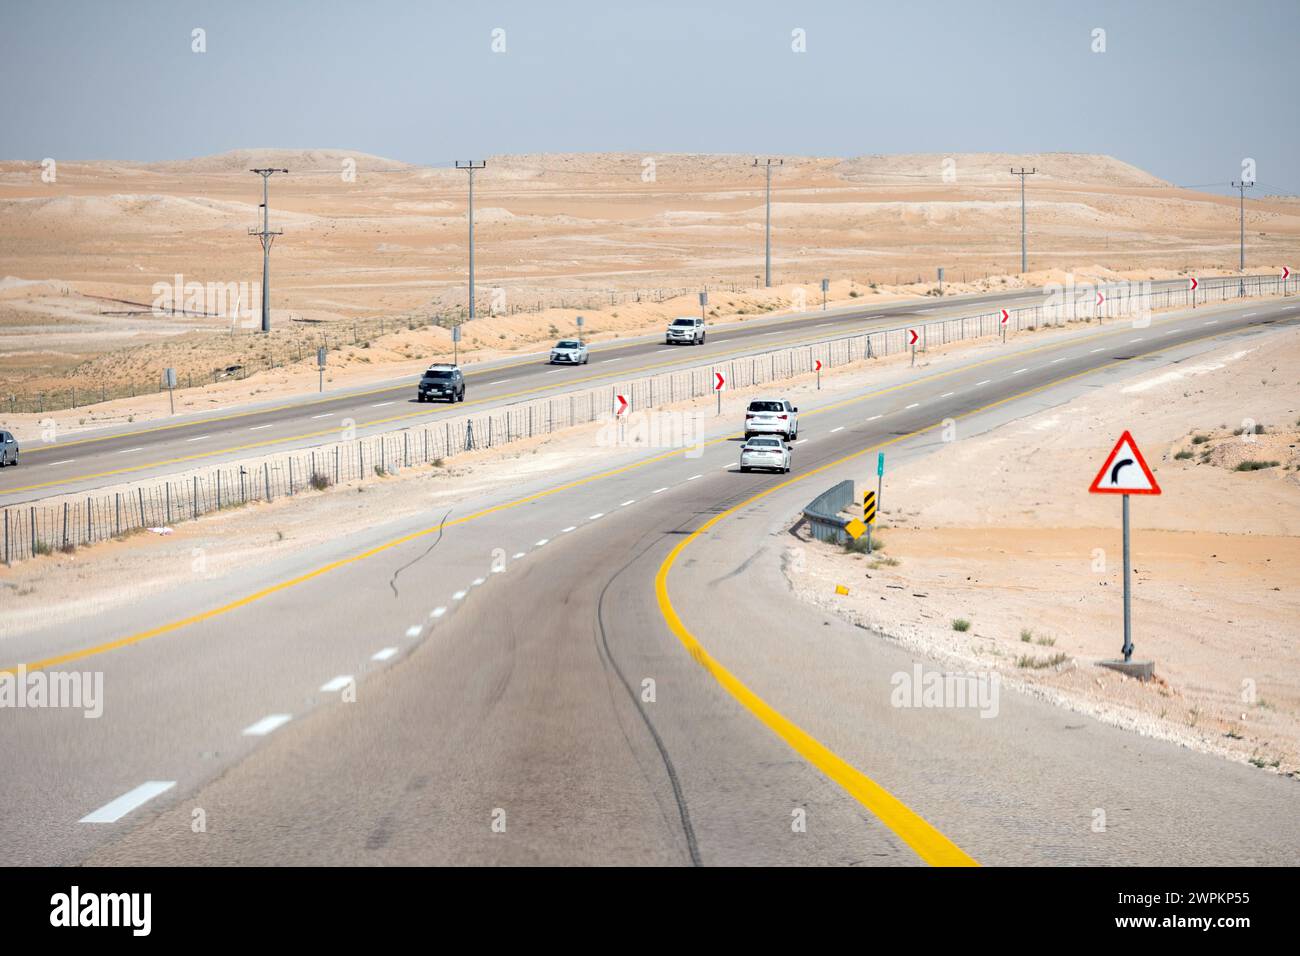 Signboard at the Saudi Arabian Desert to give distances of main city's to the travelers. Saudi Desert Roads Stock Photo